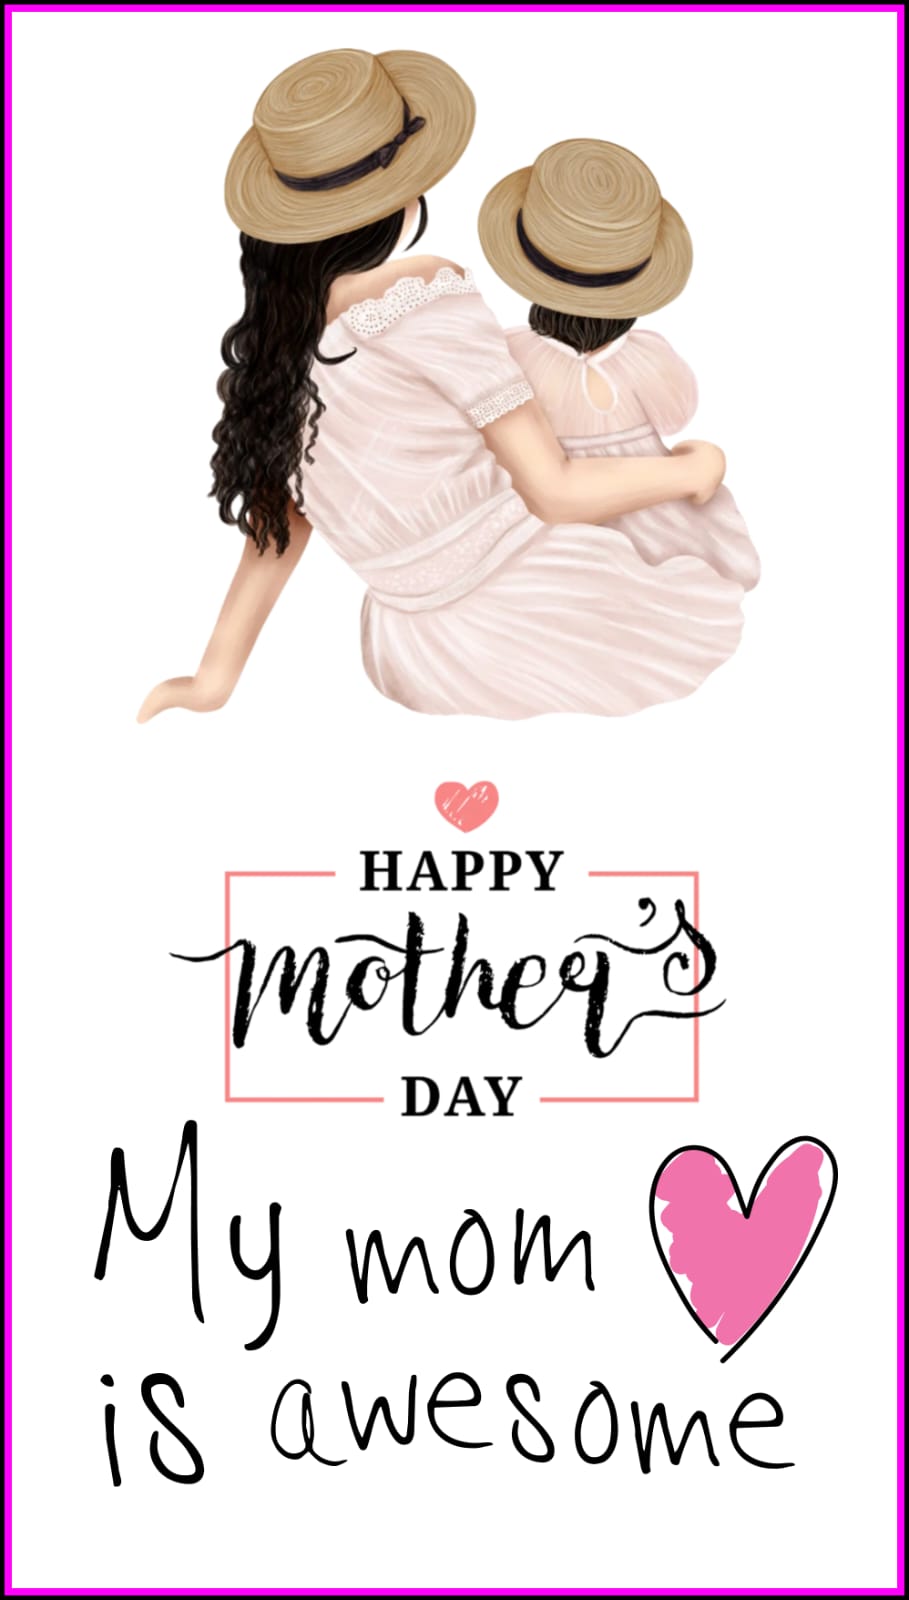 Happy Mother's Day image wallpaper status DP Download